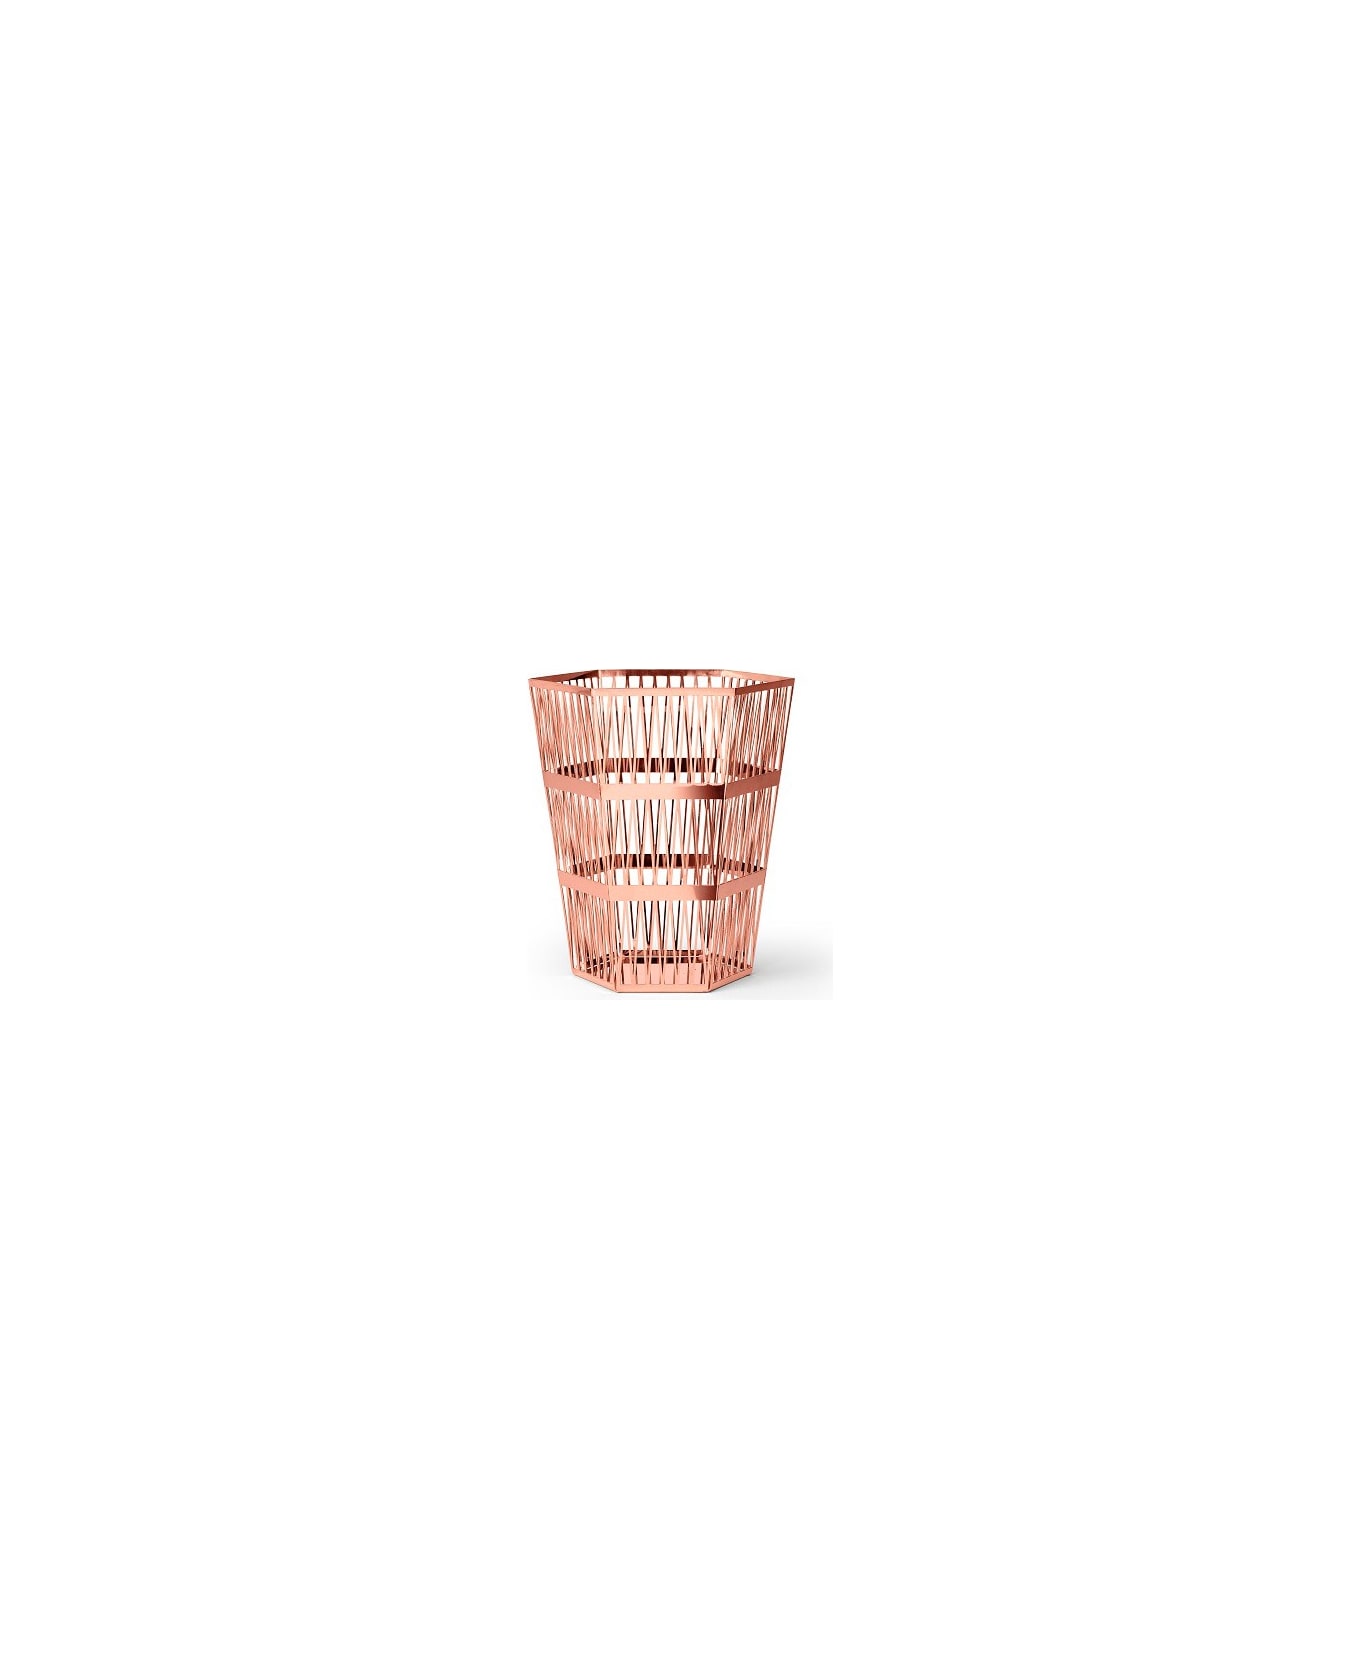 Ghidini 1961 Tip Top - Small Paper Basket Rose Gold - Rose gold インテリア雑貨